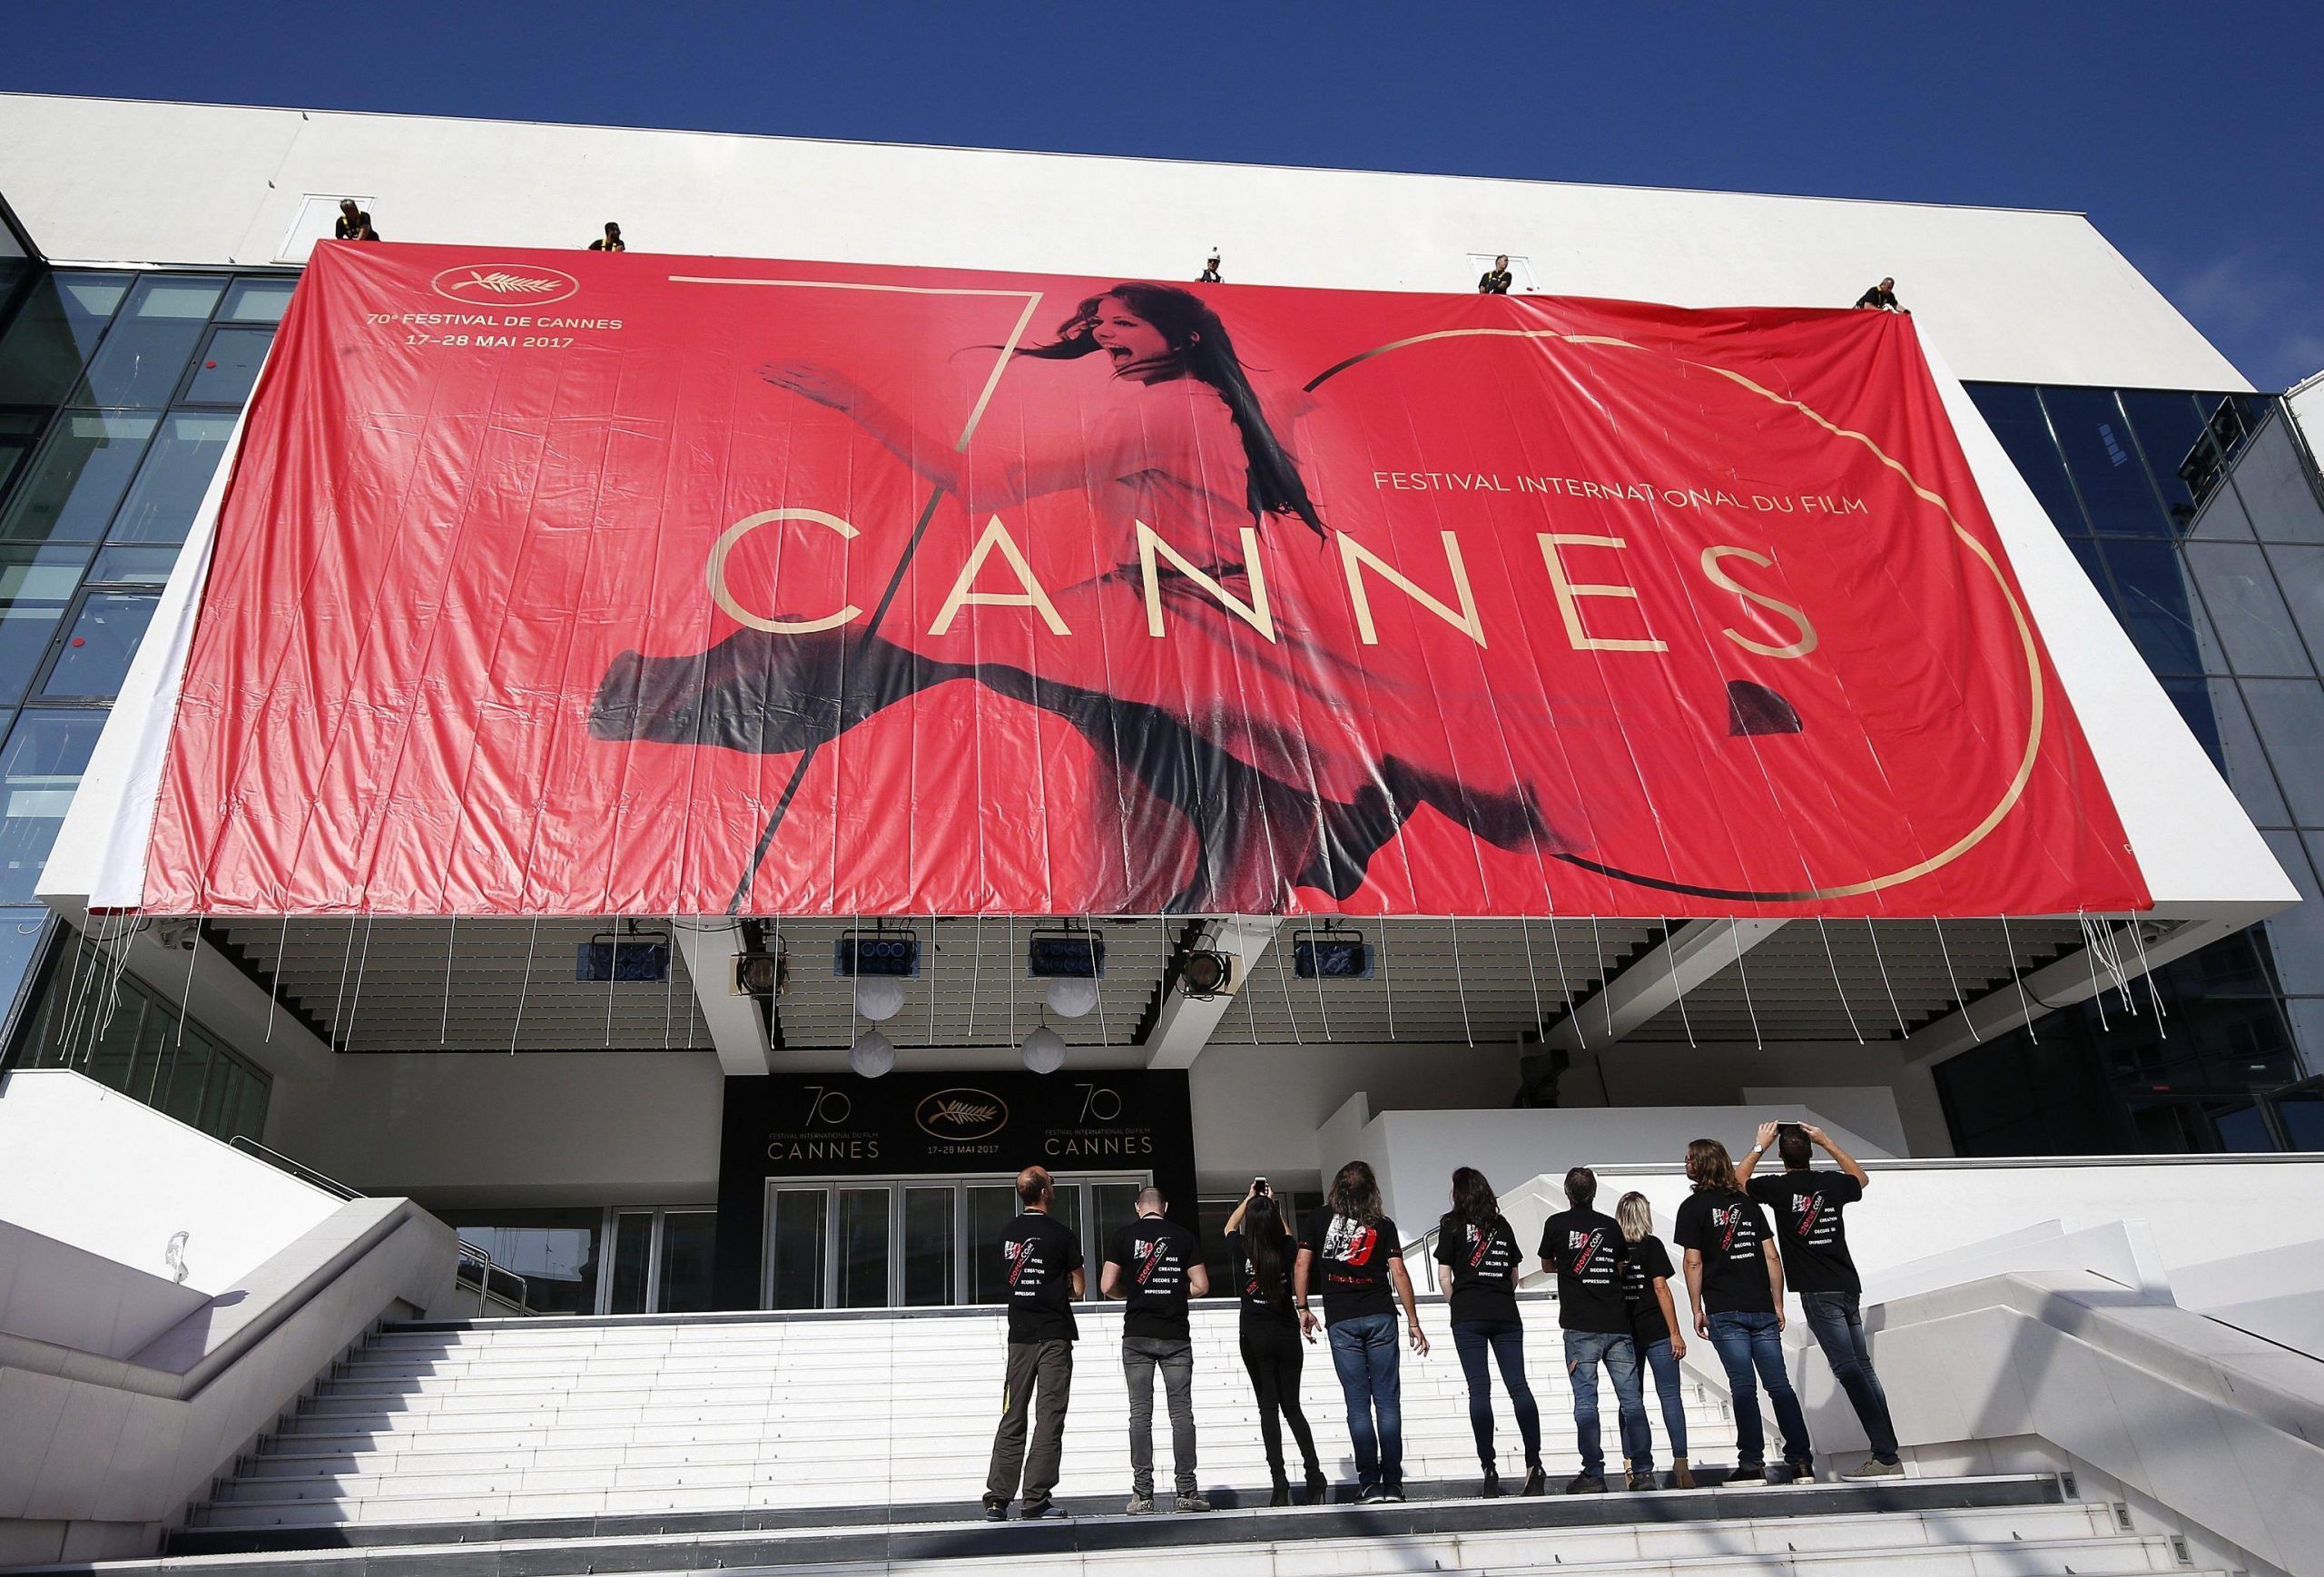 Festival di Cannes 2017 date biglietti attori ospiti film